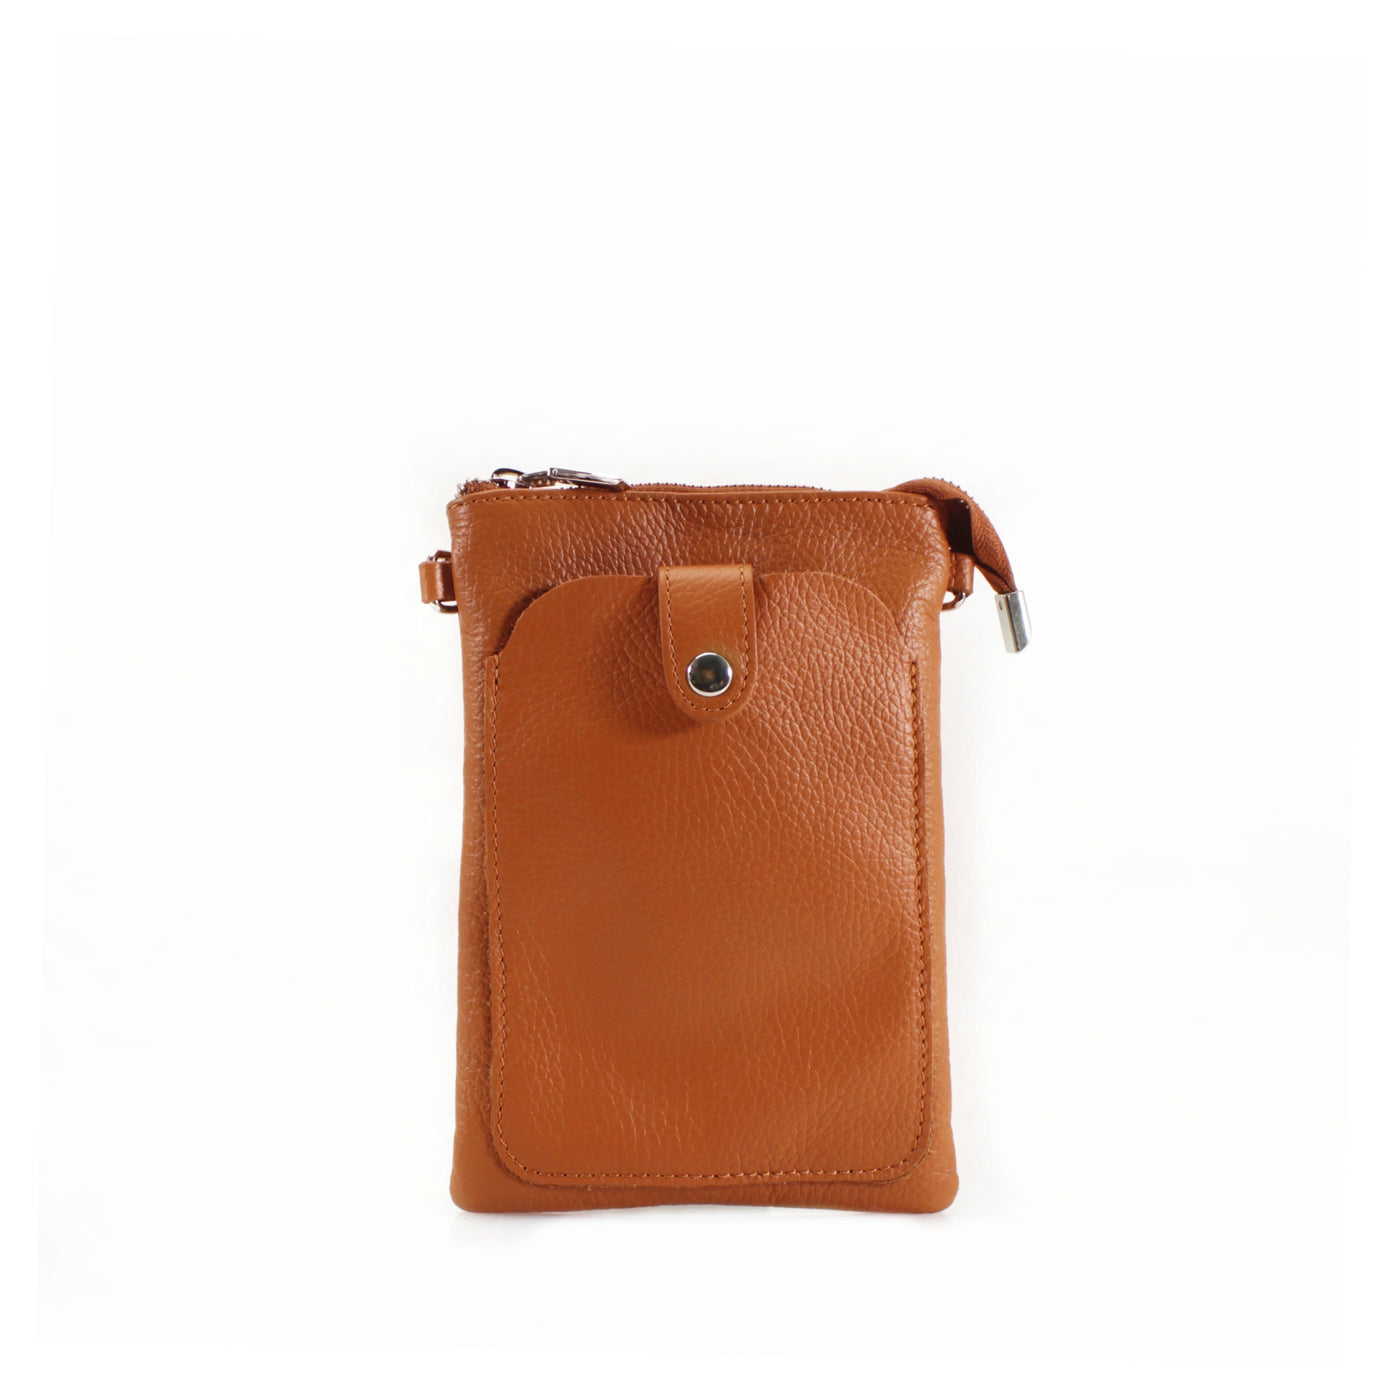 Leather Press-stud Phone Handbag - Tan